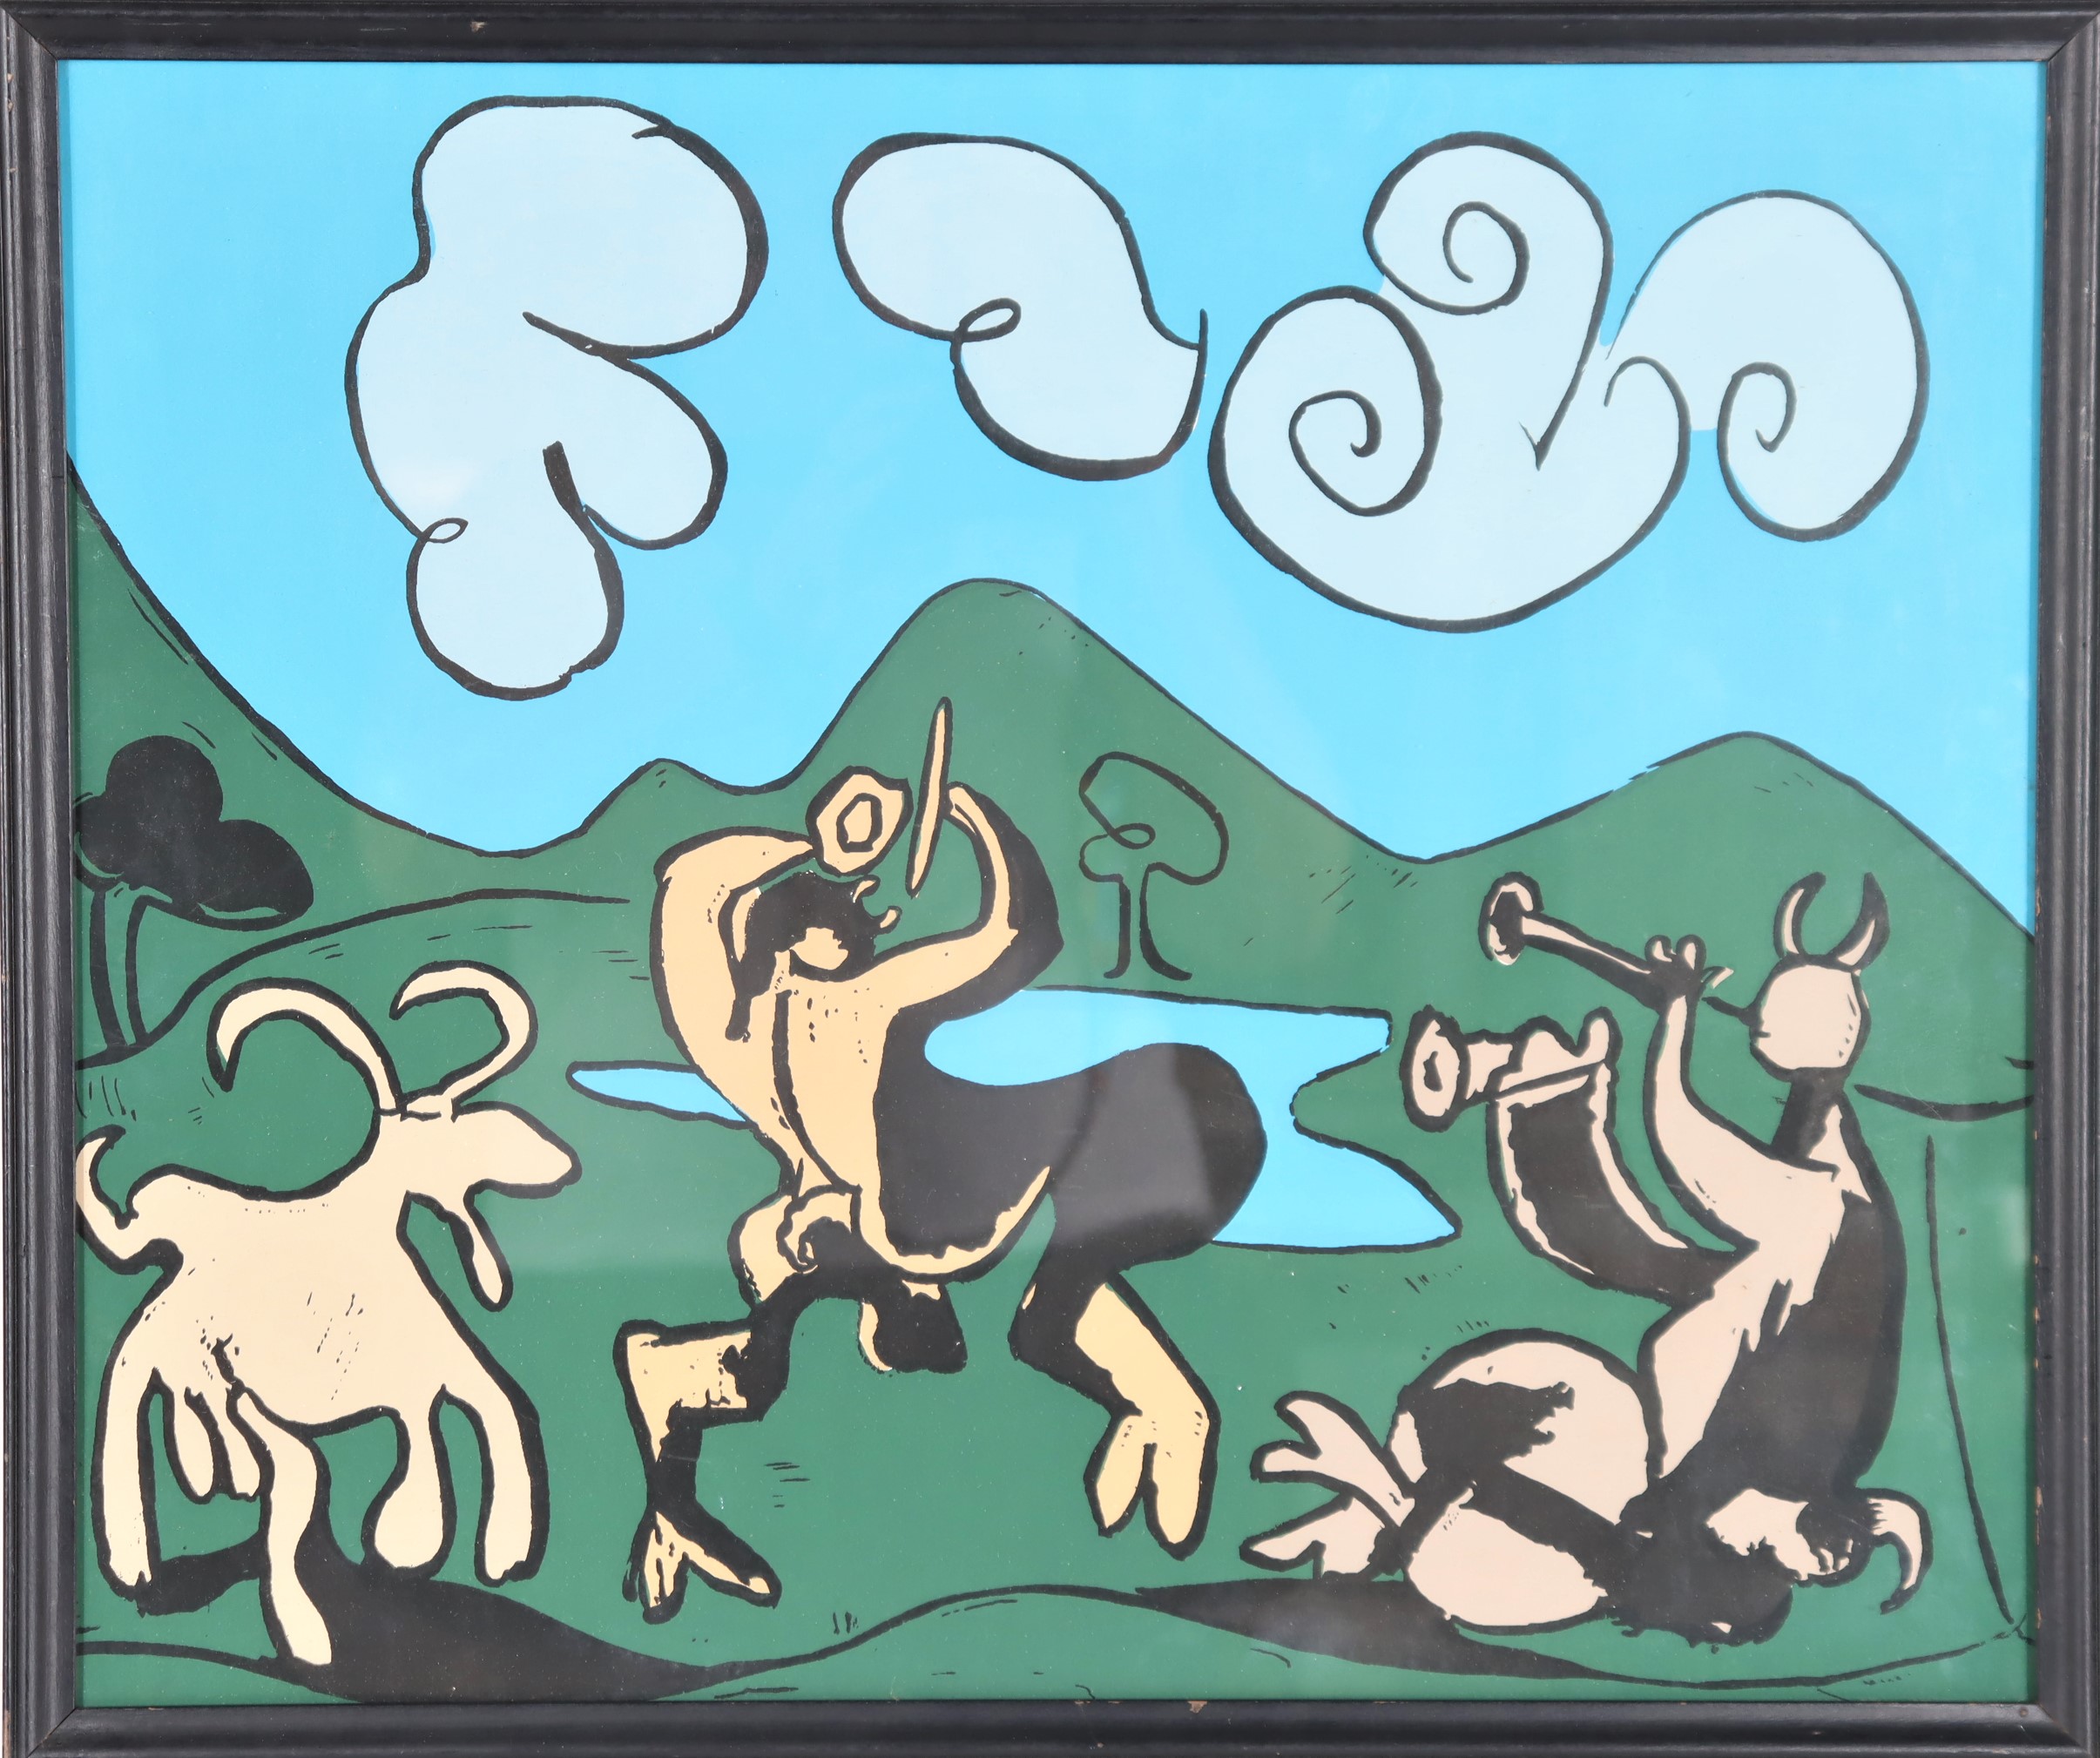 Pablo Picasso "Faun & Goat" Print